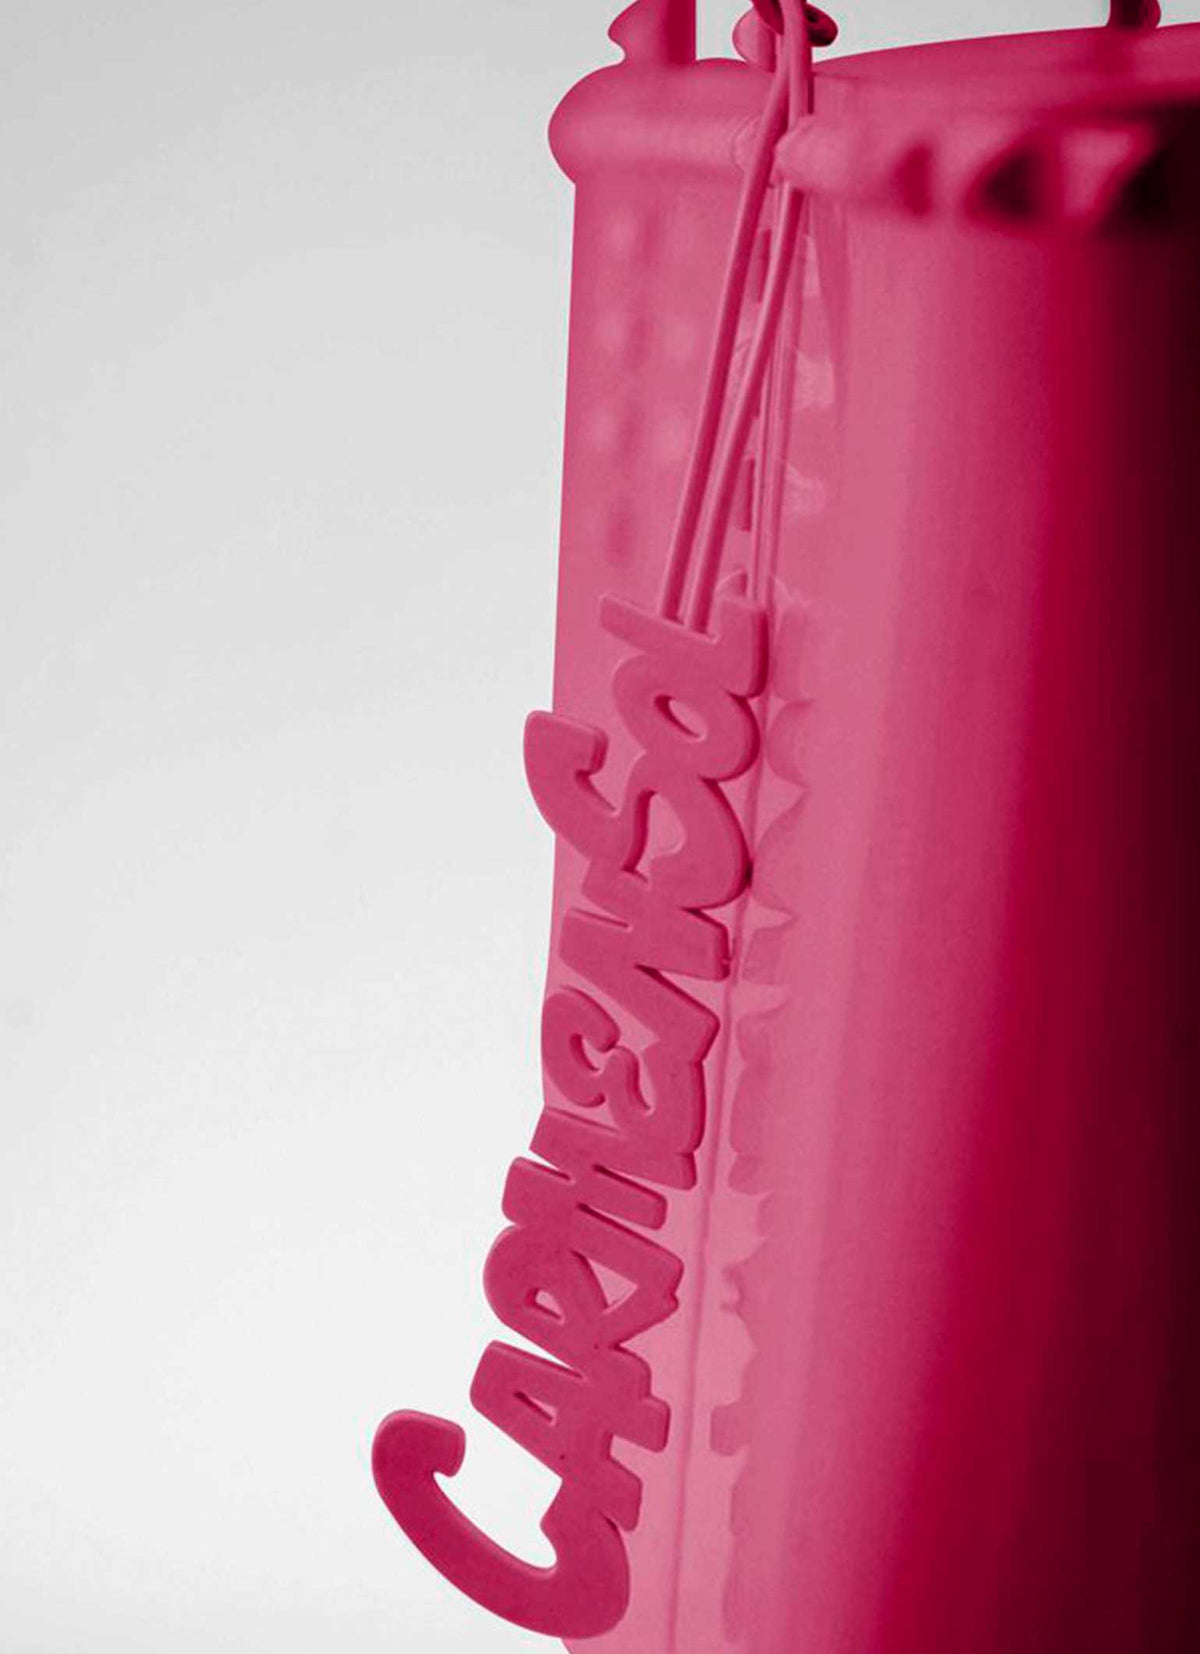 Waterproof Carmen Sol jelly charm purses in color fuchsia